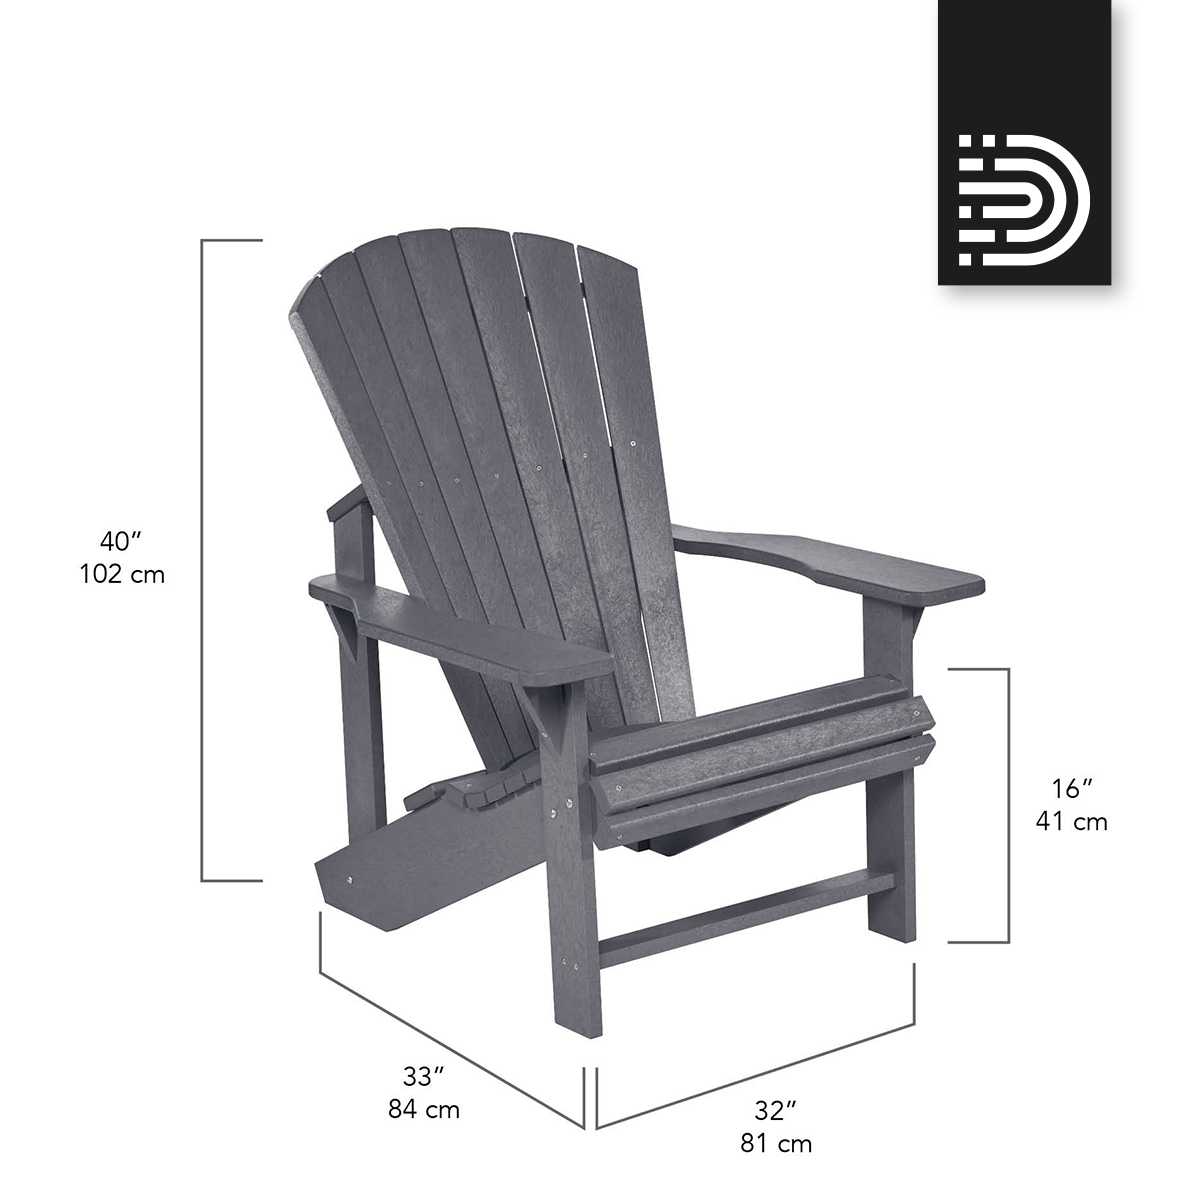  C01 Classic Adirondack Chair - Light Grey 19